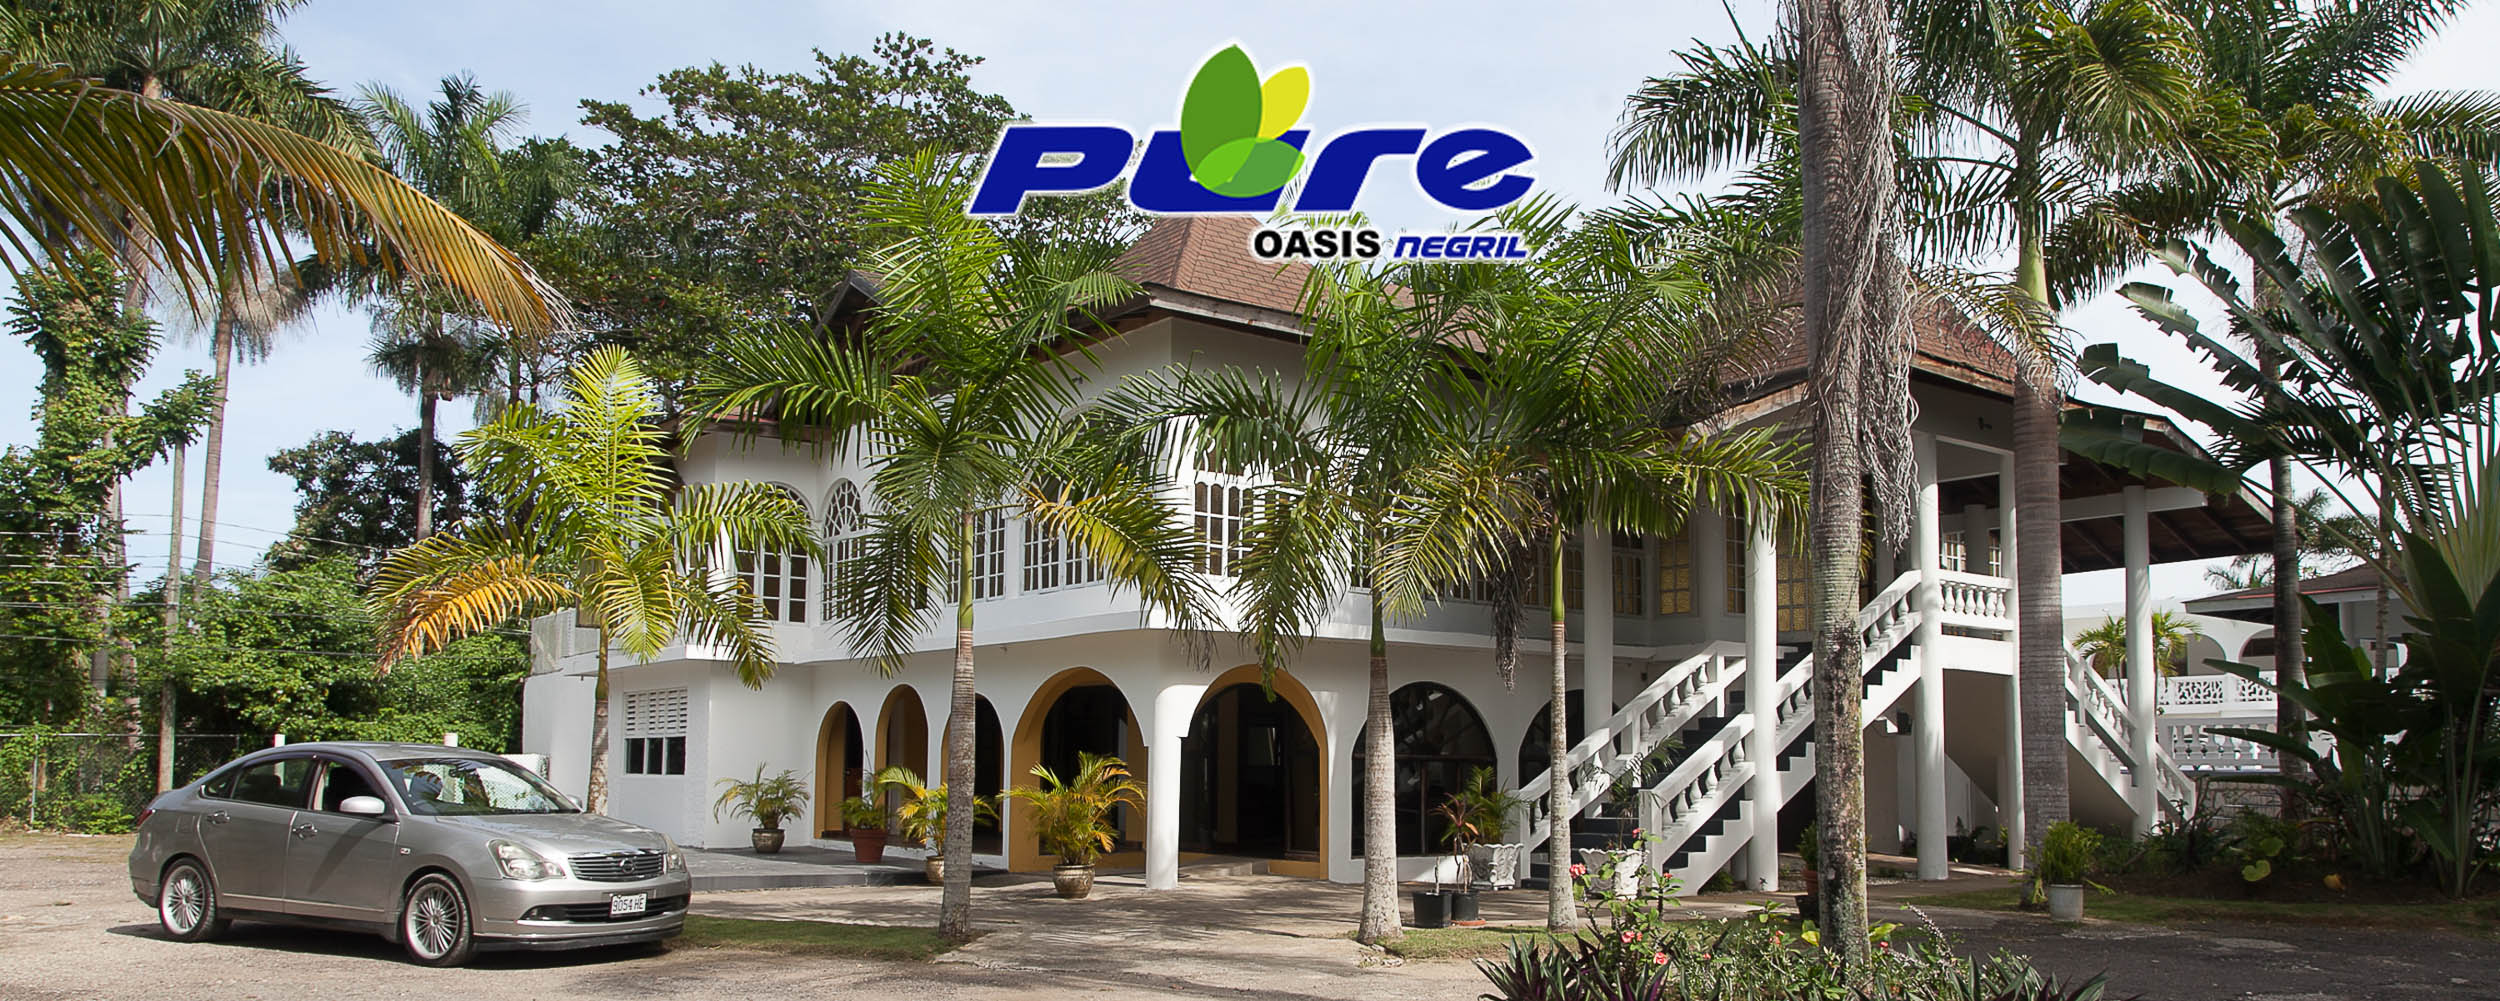 Pure Oasis Resort - Negril Jamaica